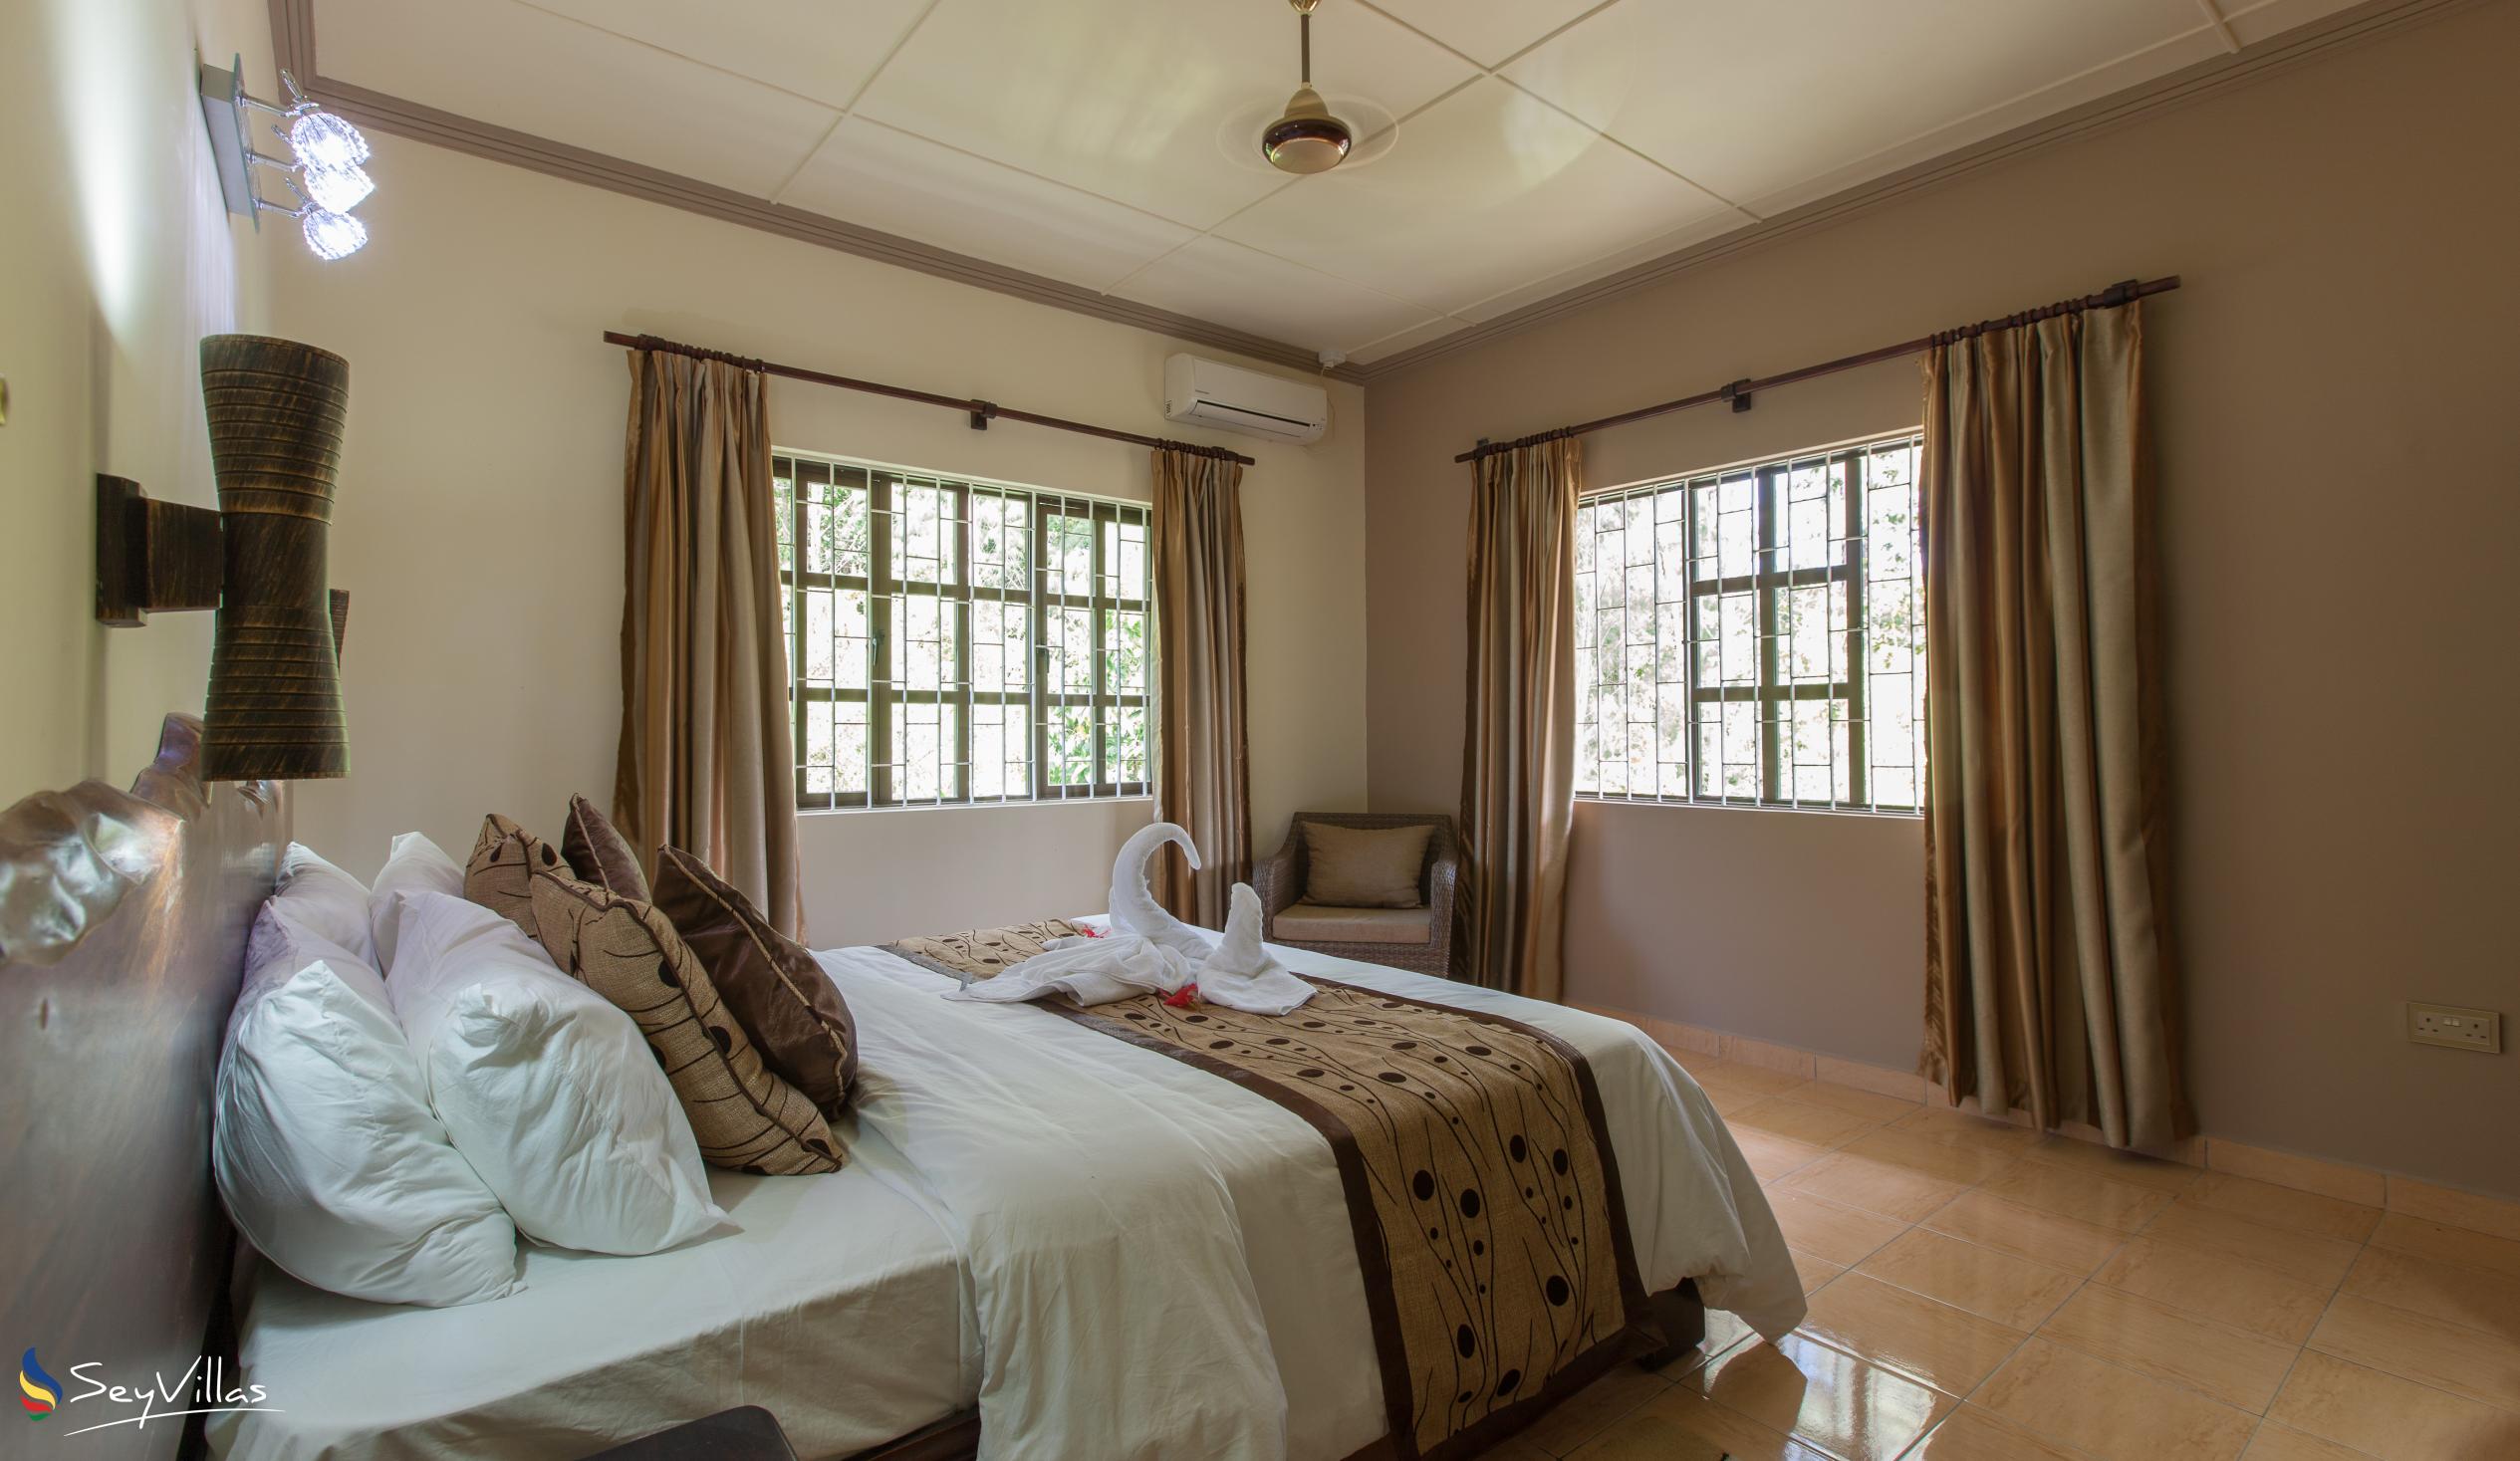 Foto 109: Chez Bea Villa - Appartement 1 chambre - Praslin (Seychelles)